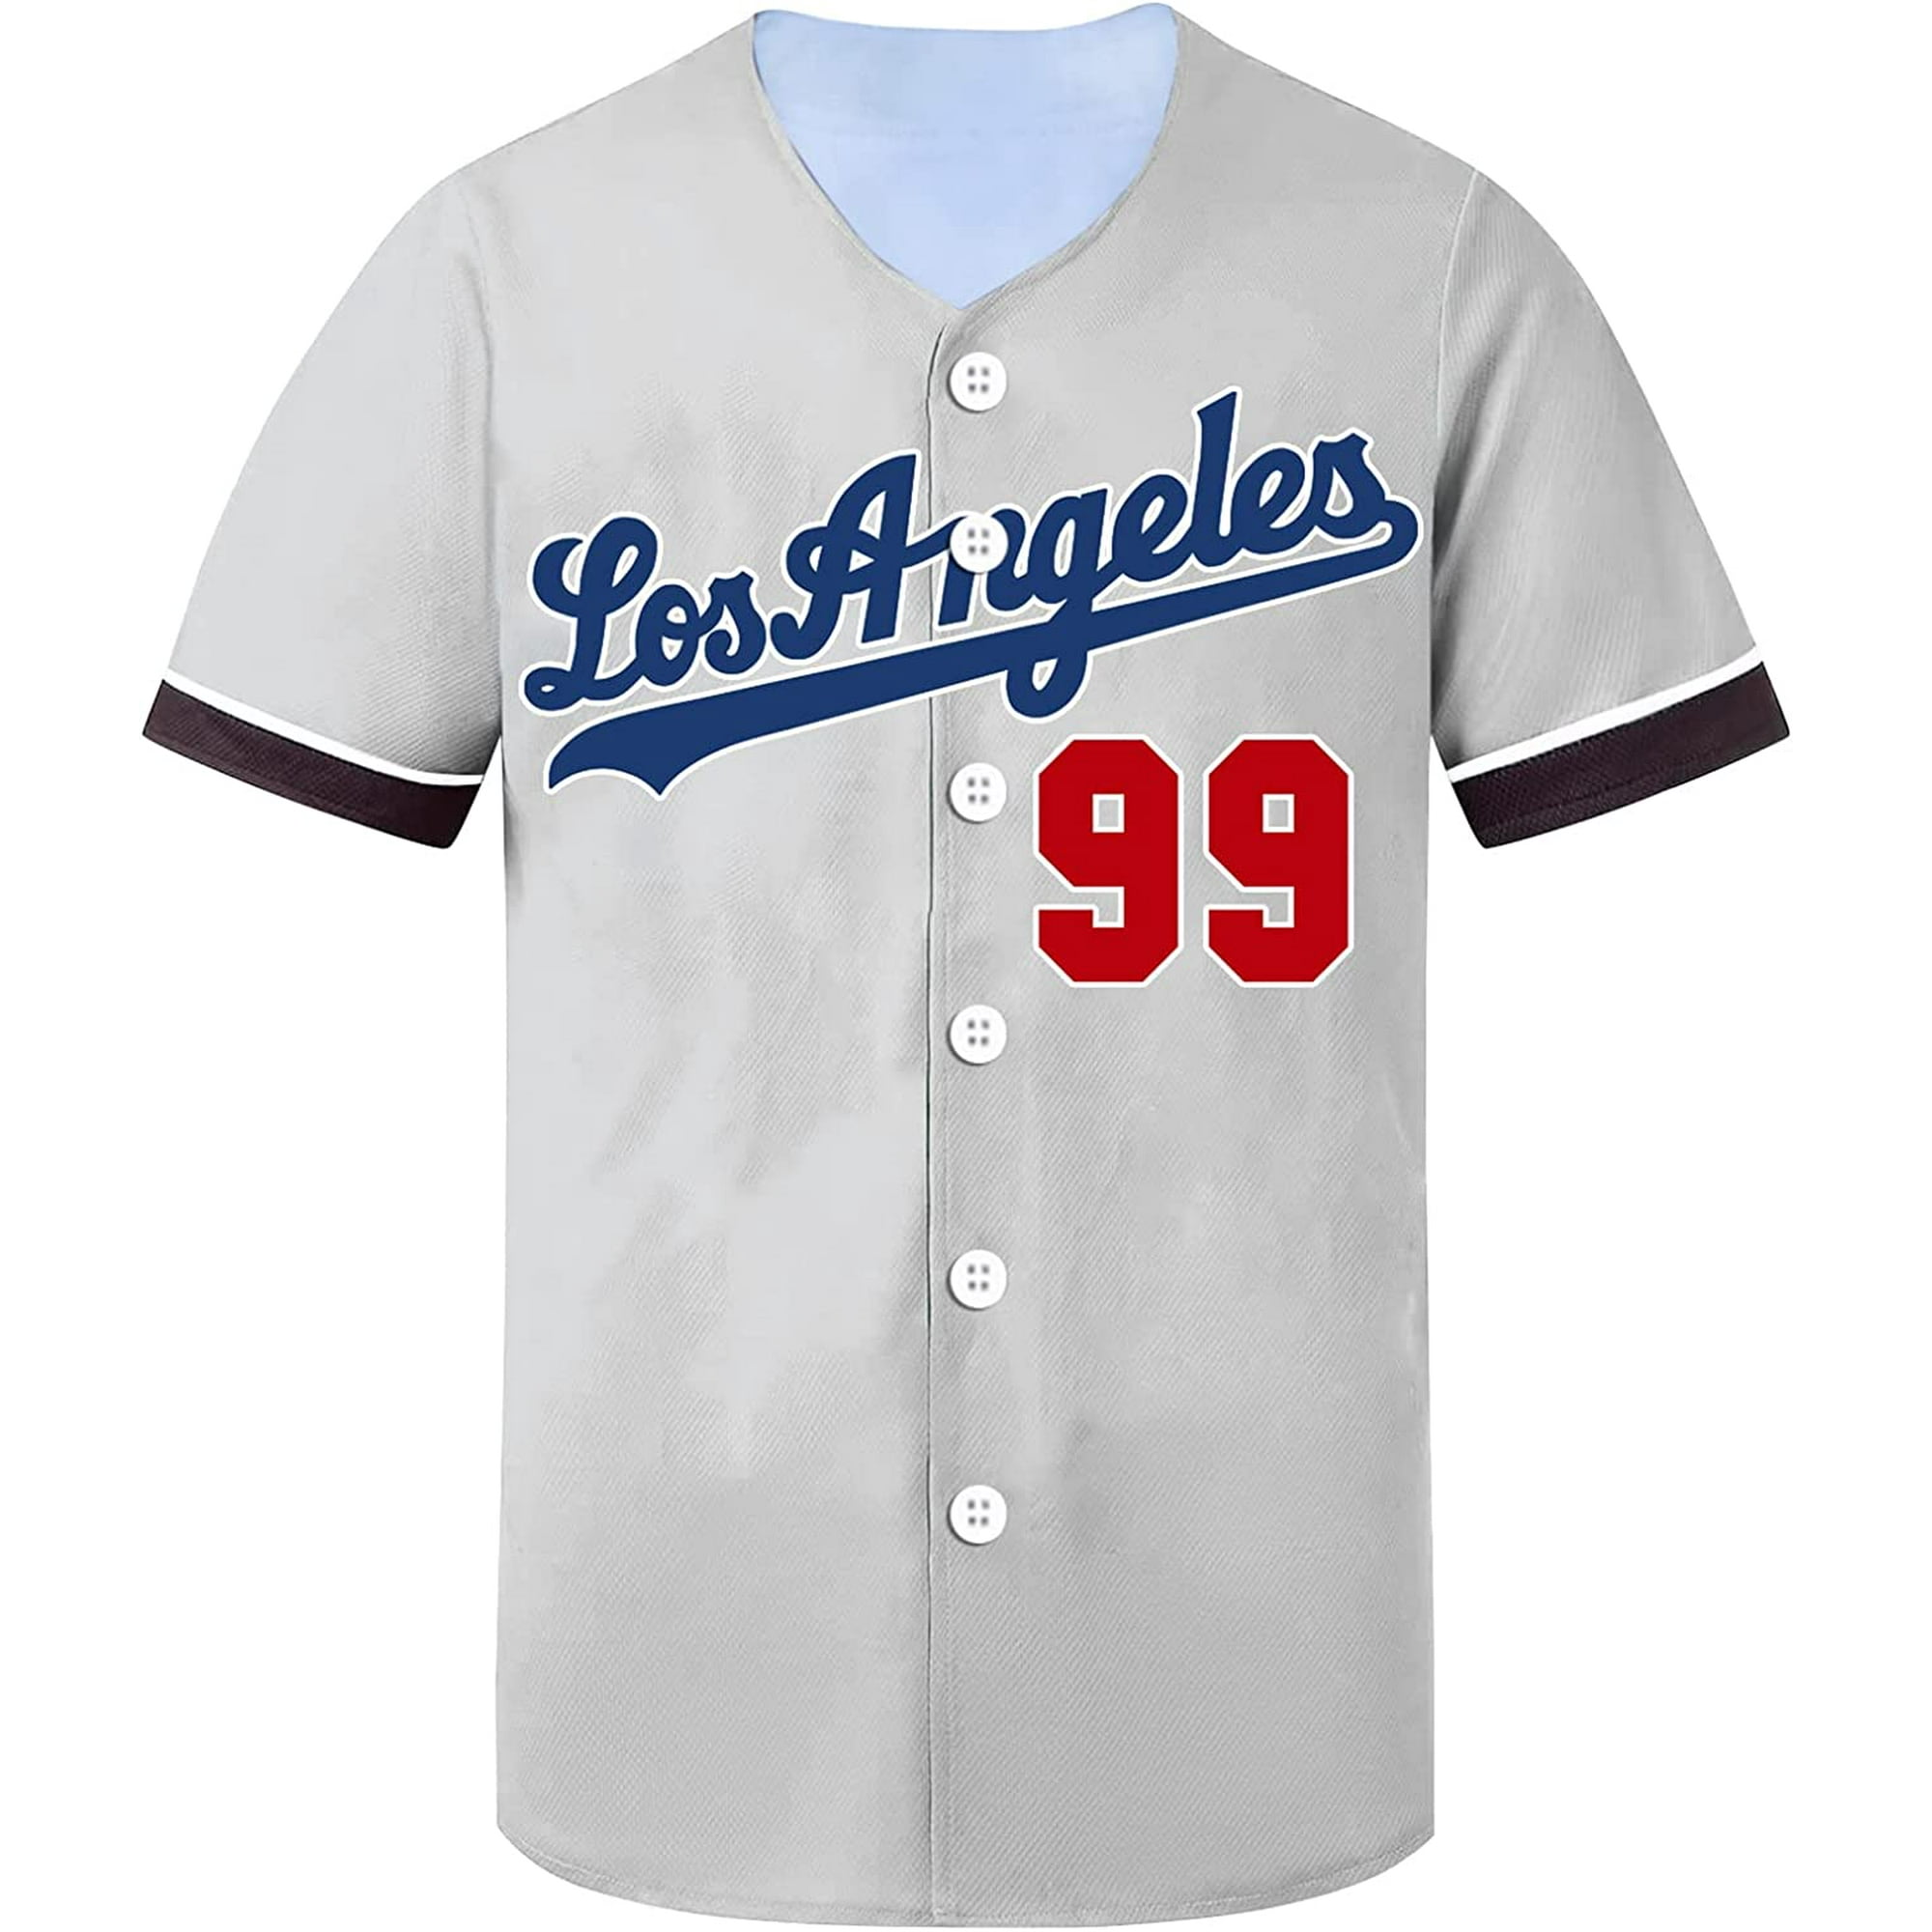 Los Angeles Dodgers Jersey 00's - XL